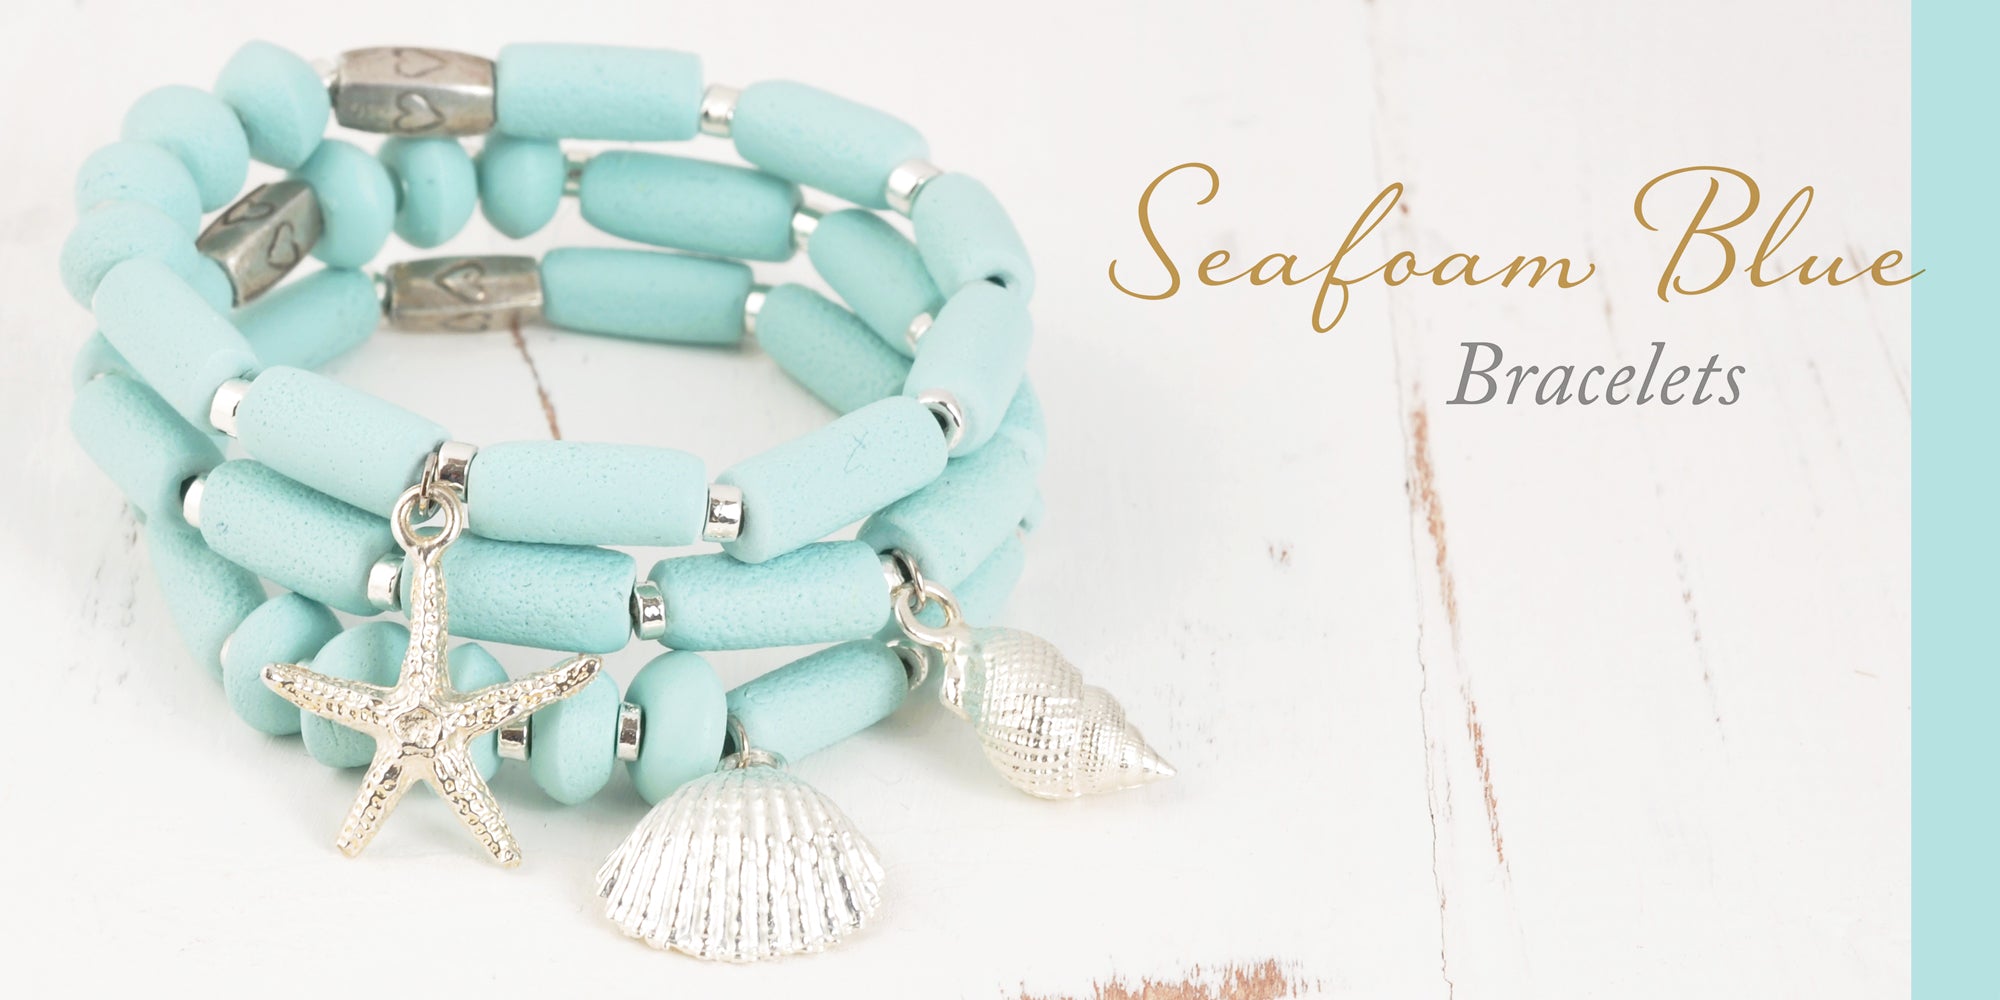 Seafoam Blue Bracelet Bead Kits magdakaminska